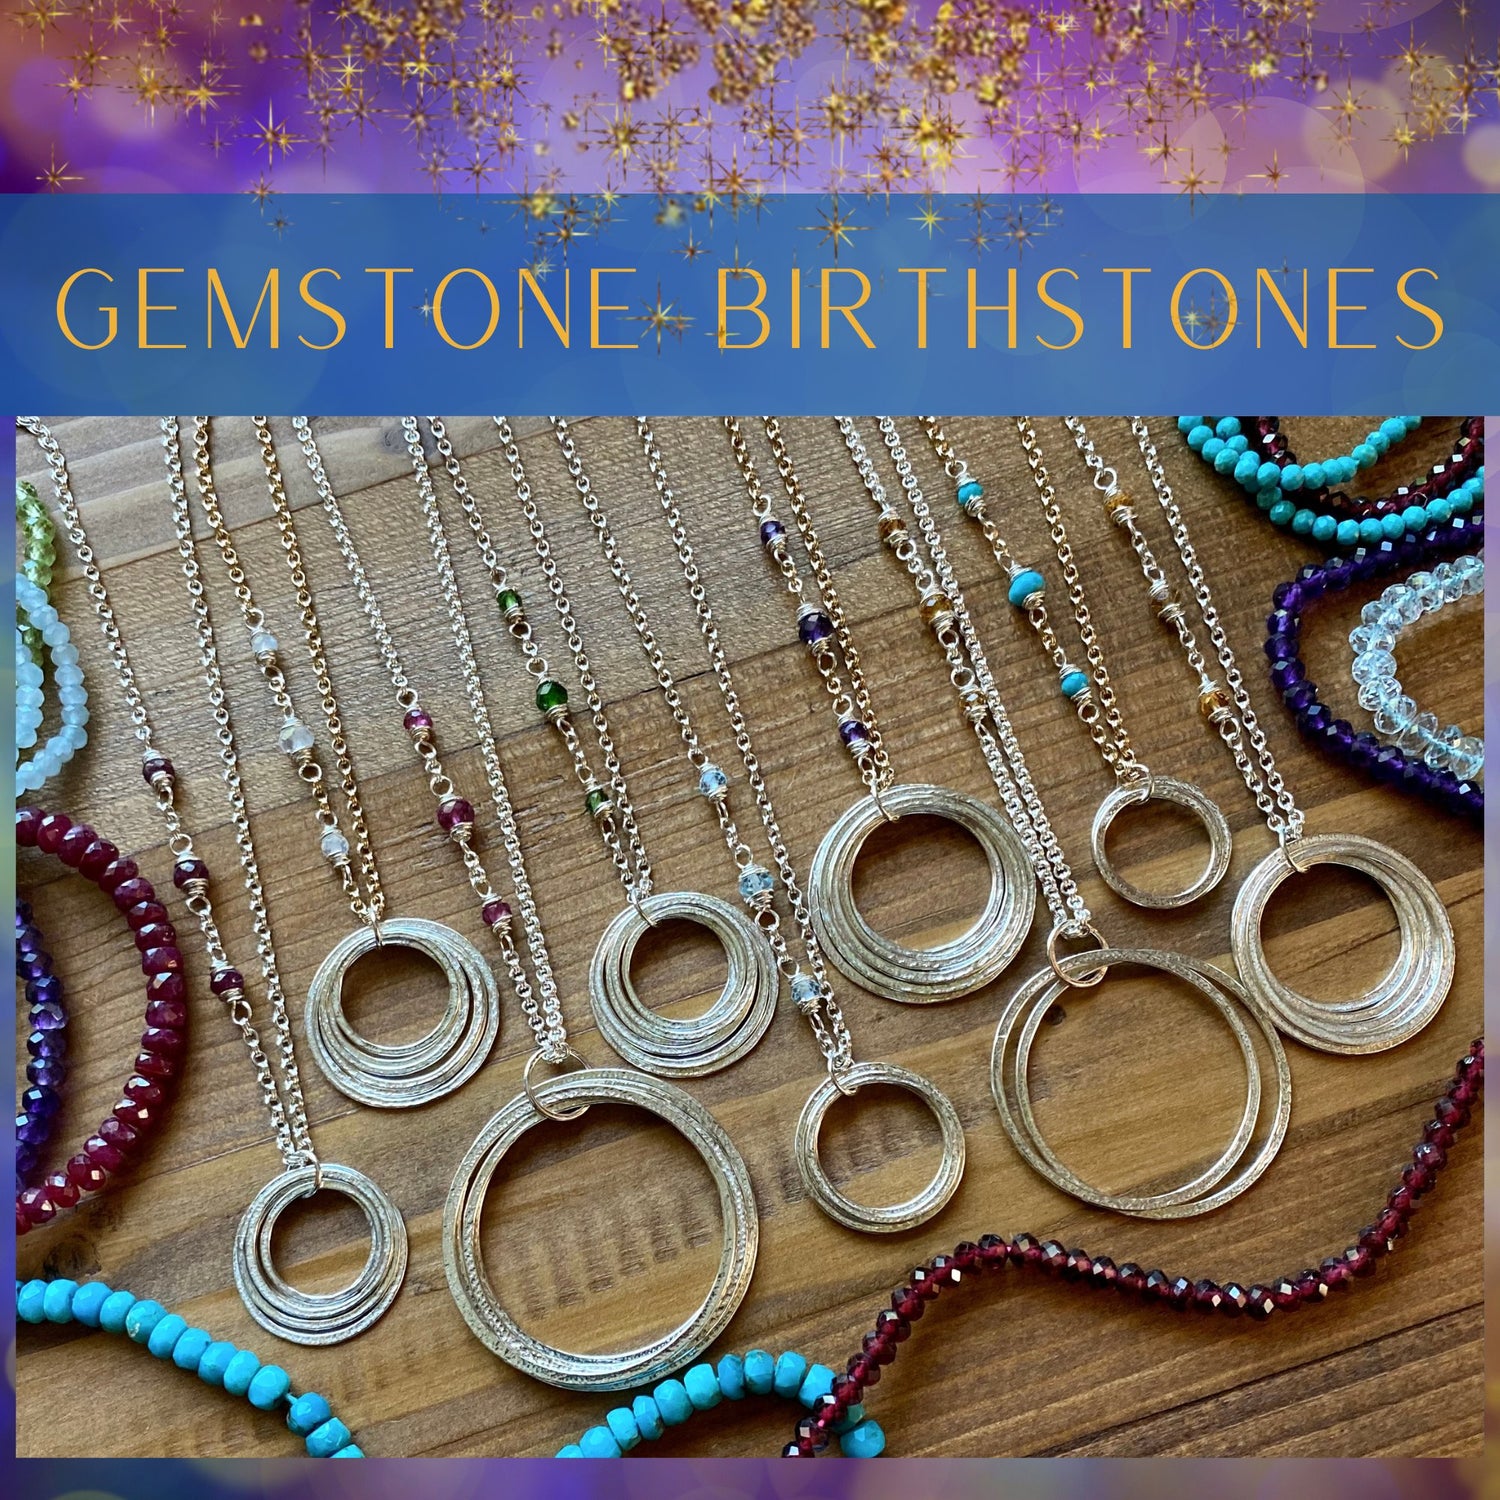 Birthstone Designs